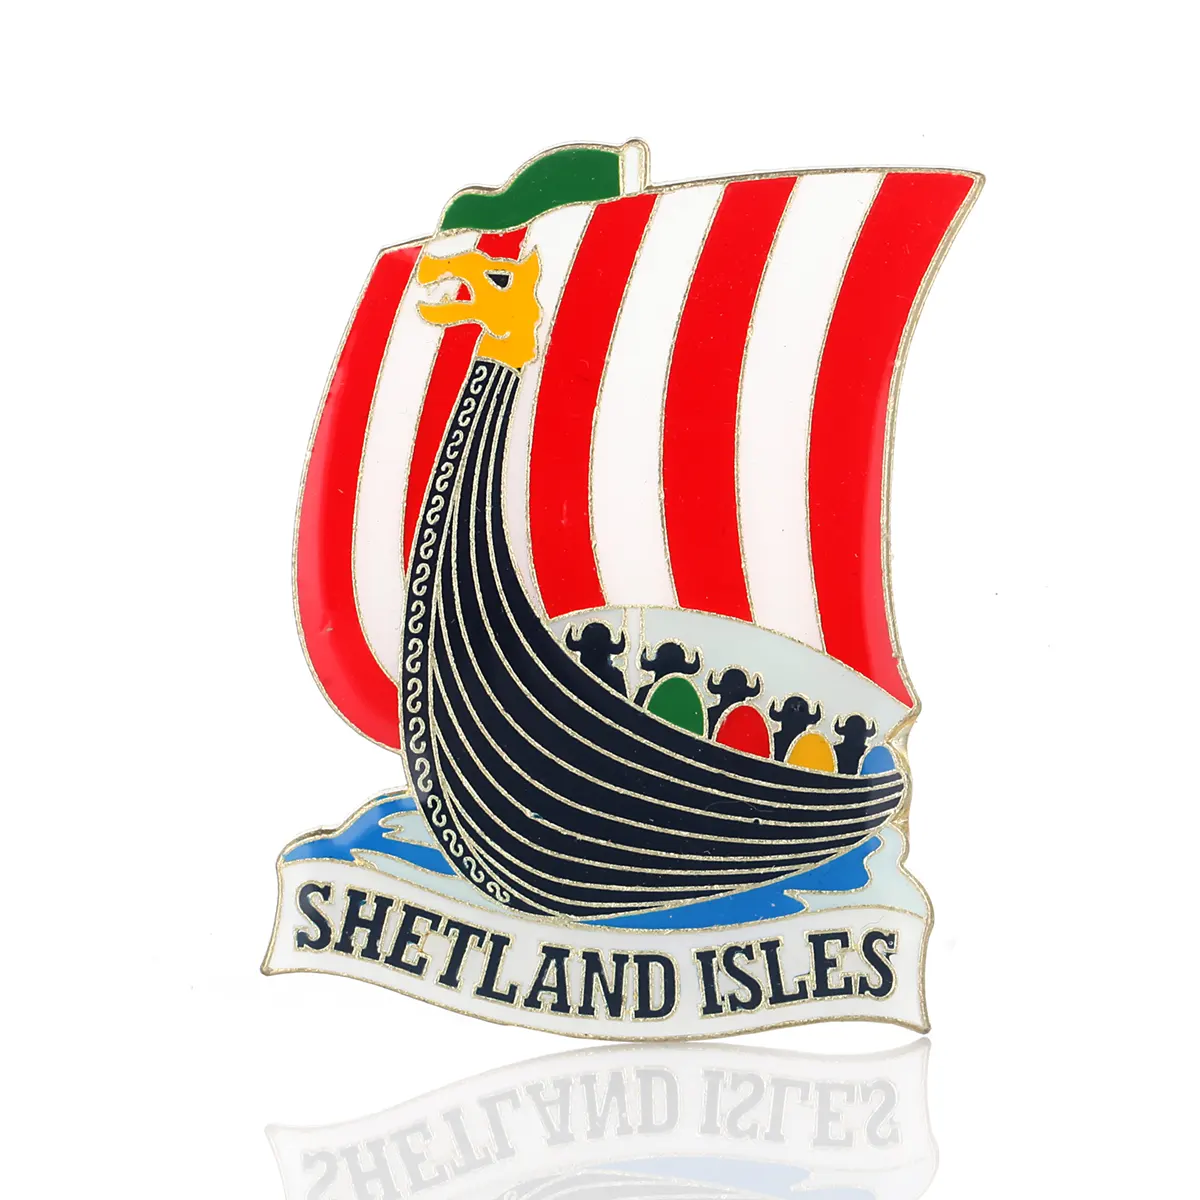 Shetland Isles Deko Magnet / Kühlschrankmagnet aus Schottland - Metall & Emaille